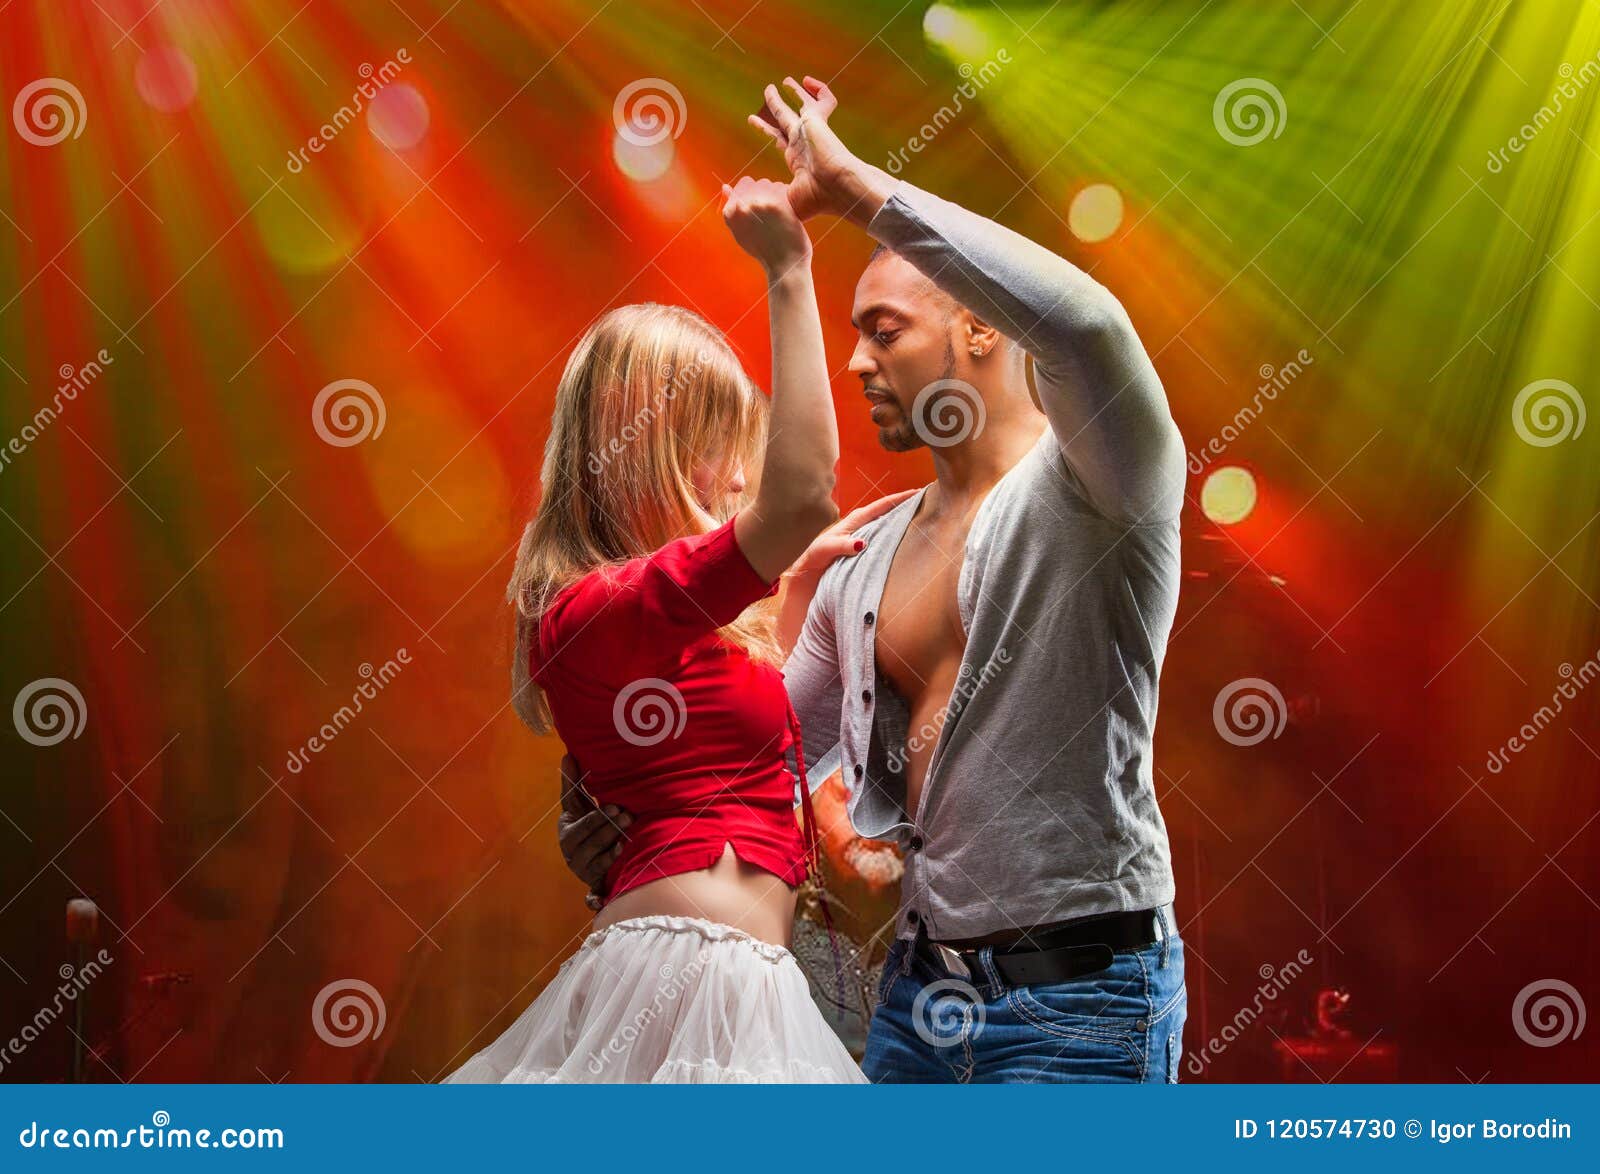 young couple dances caribbean salsa